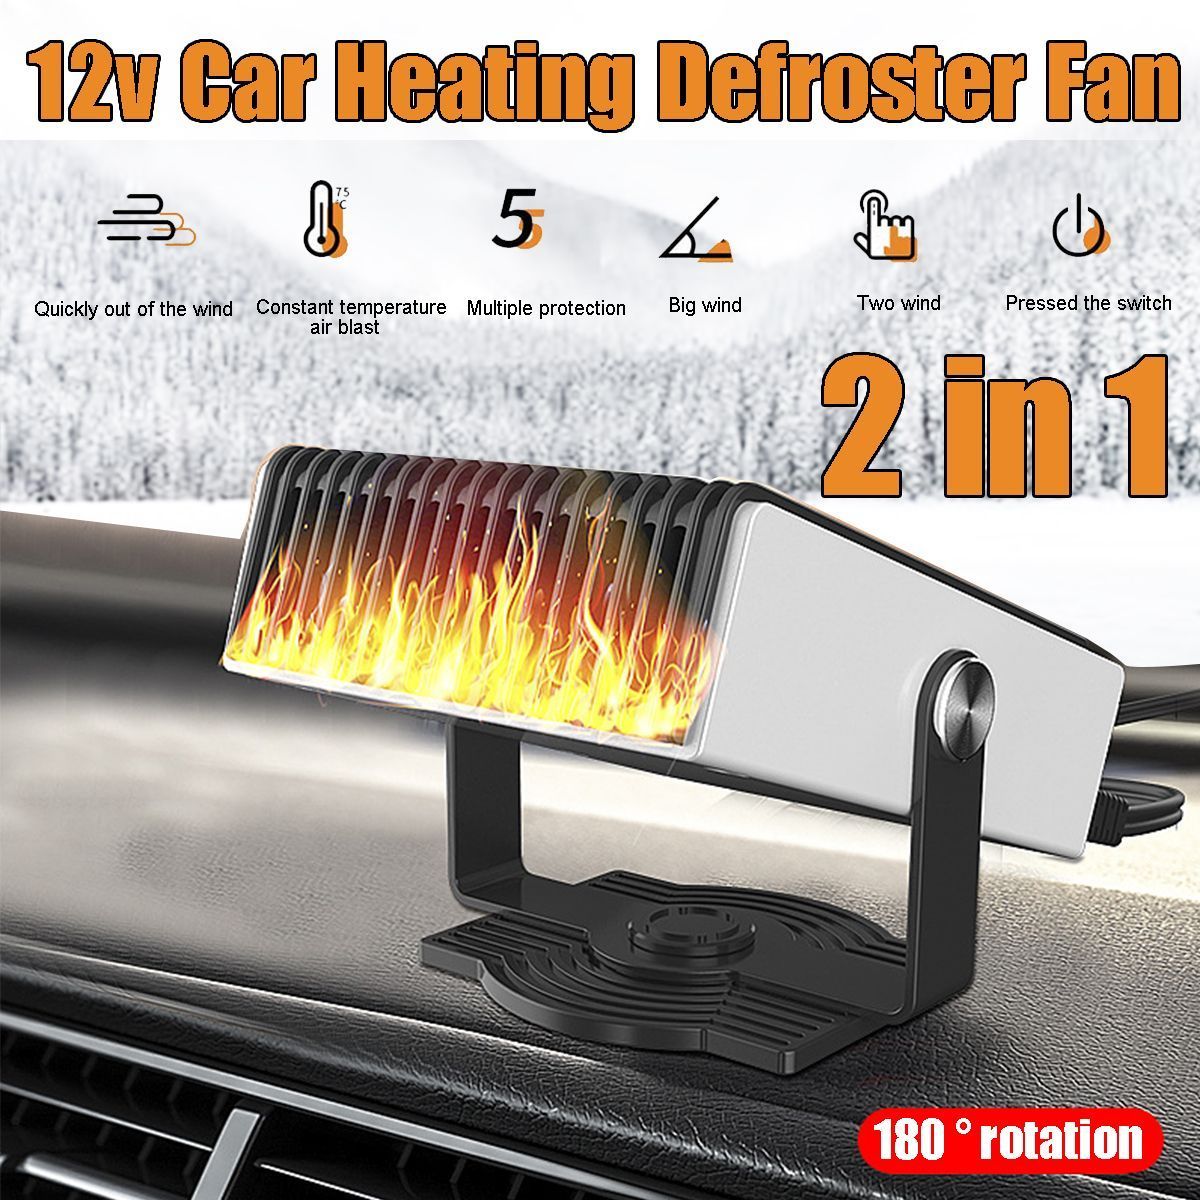 12v-Car-Heating-Defroster-Fan-Heater-1594392